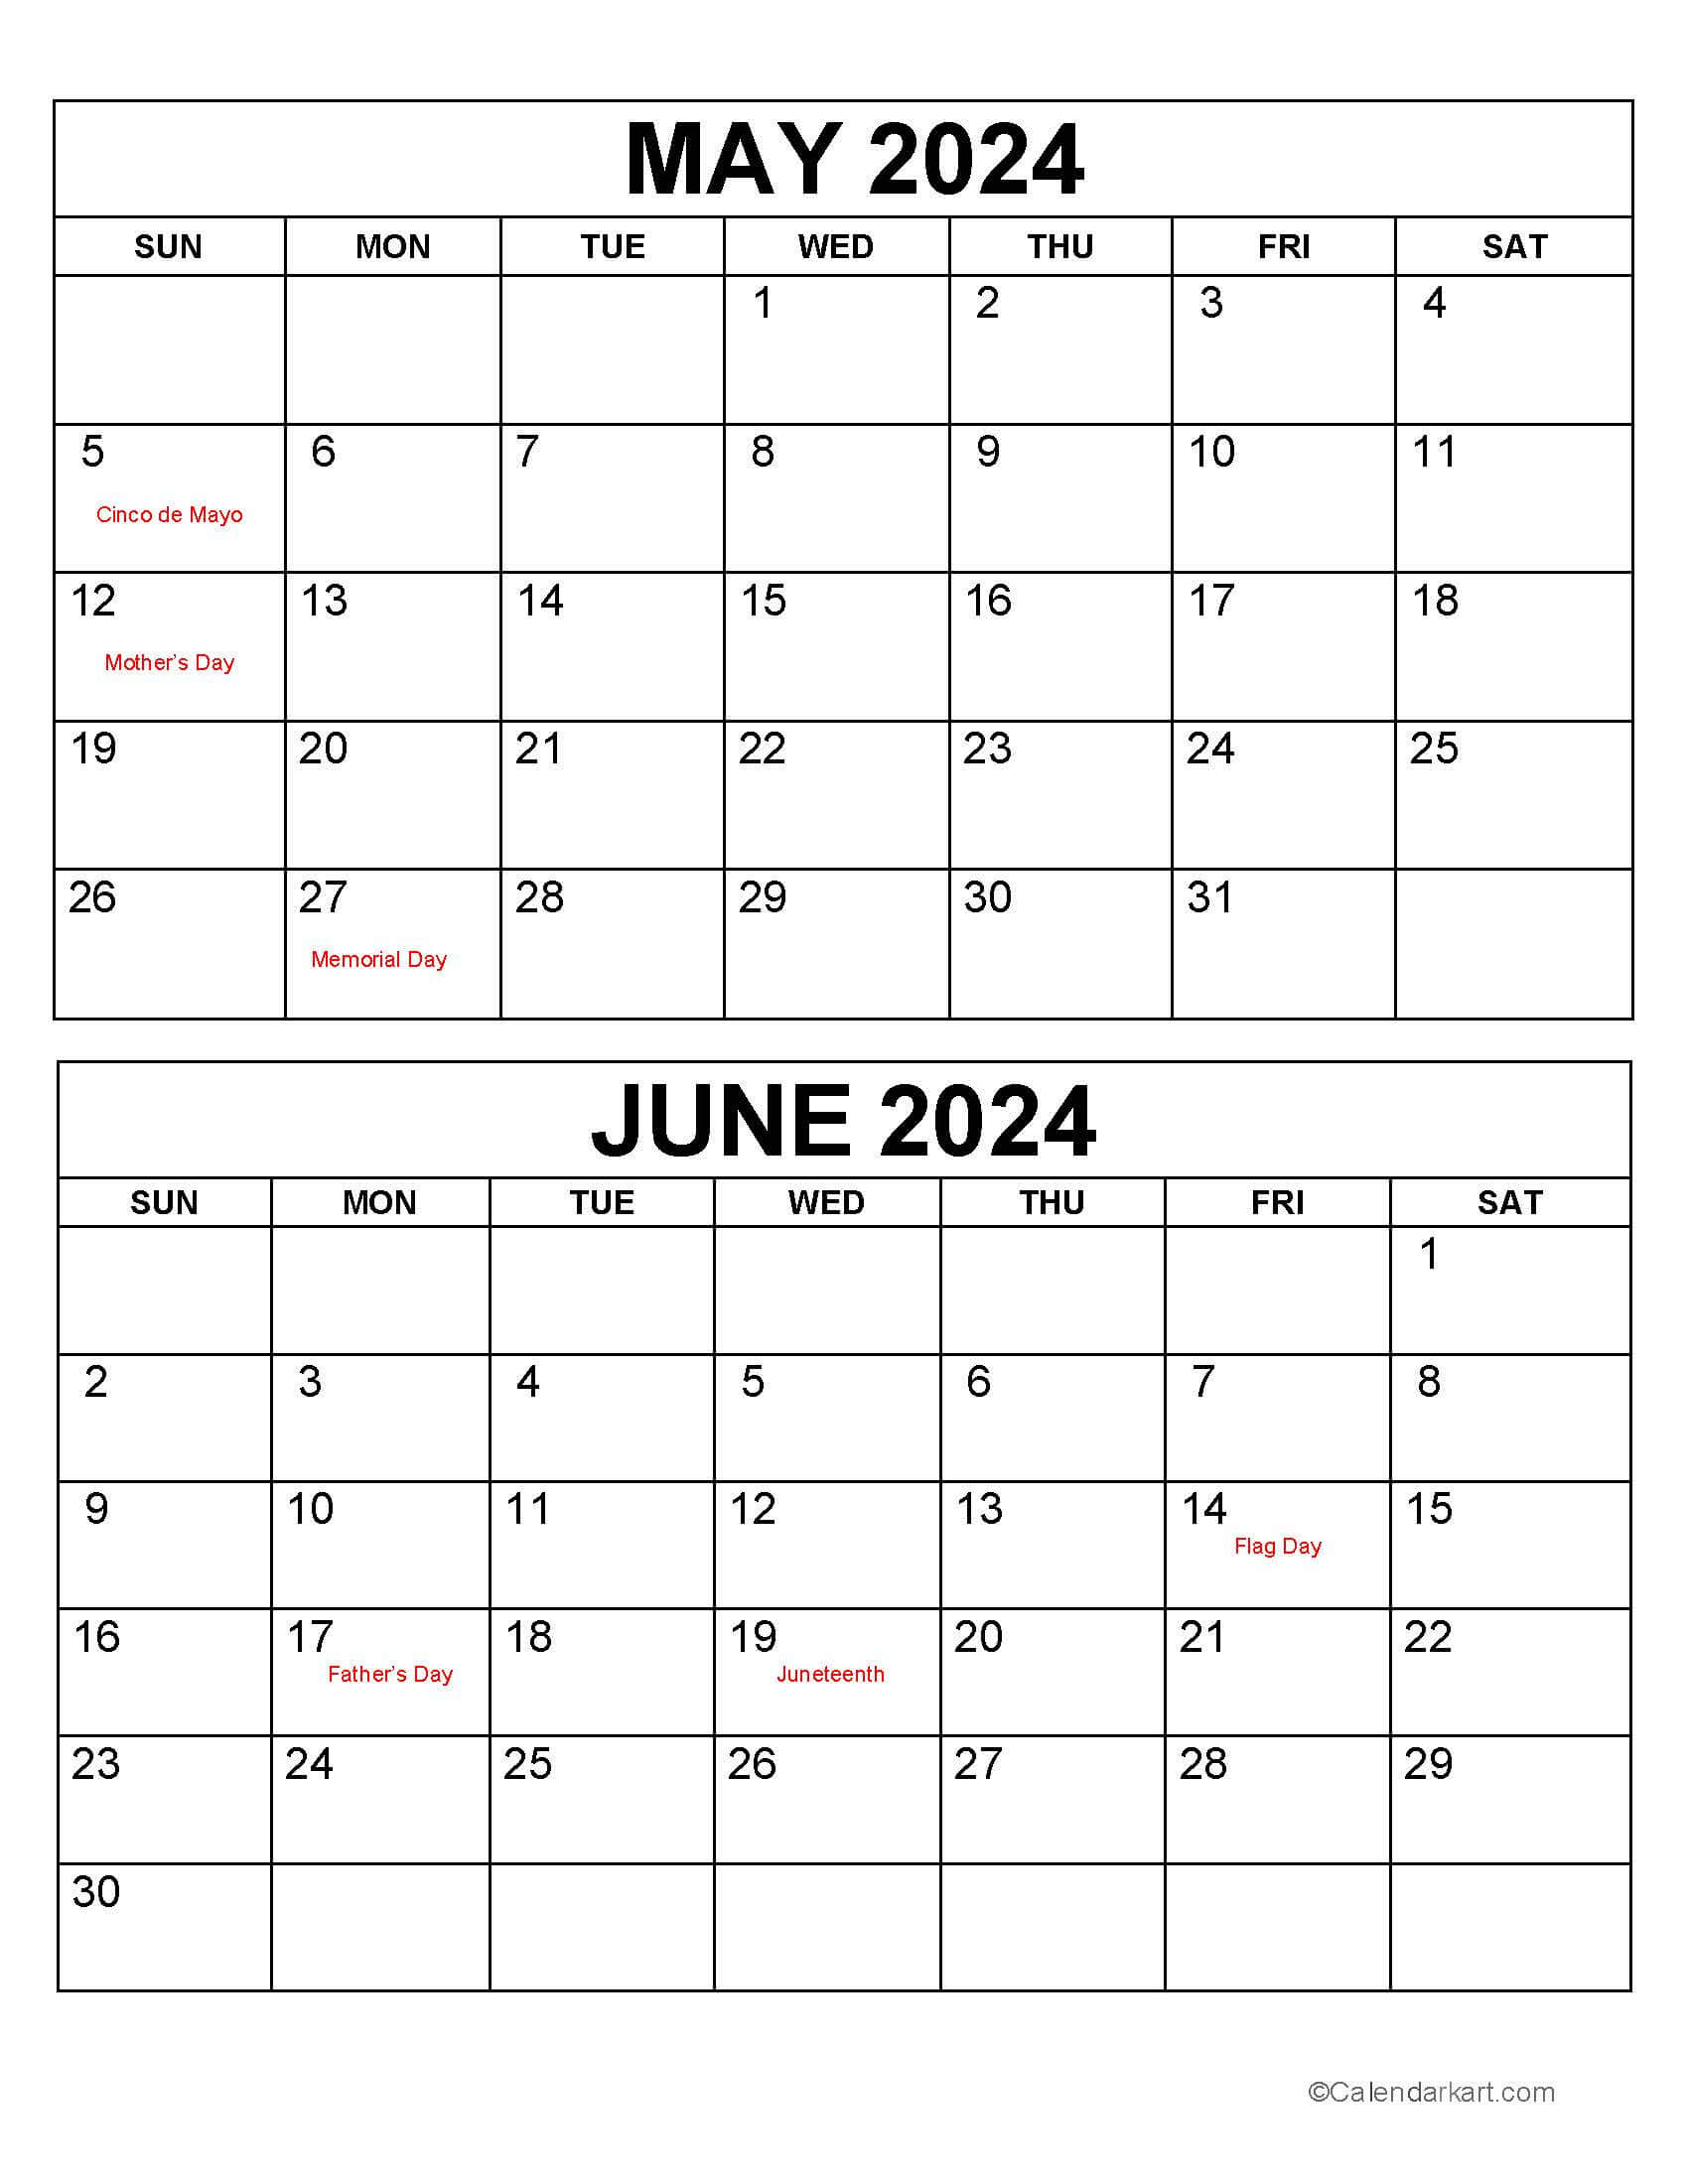 May June 2024 Calendars (3Rd Bi-Monthly) - Calendarkart within May June Calendar 2024